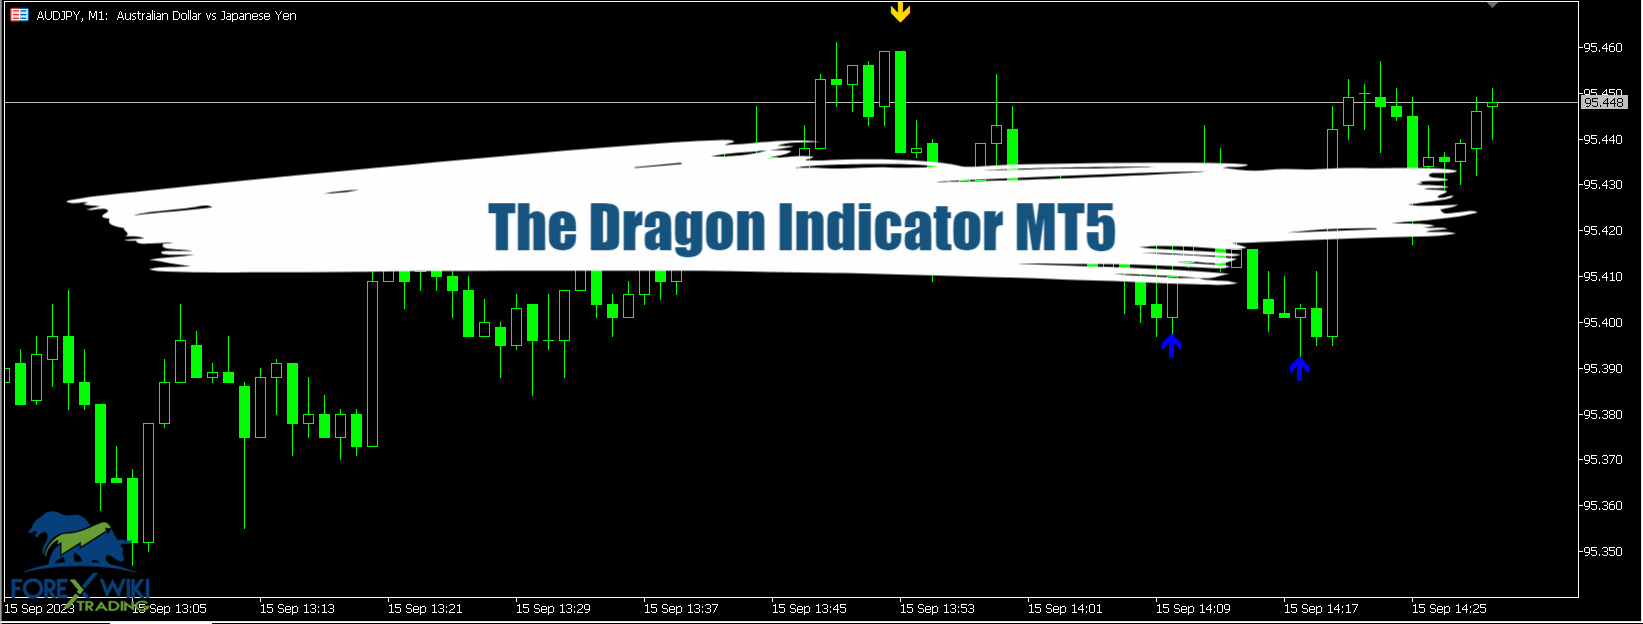 The Dragon Indicator MT5 - Free Download 44